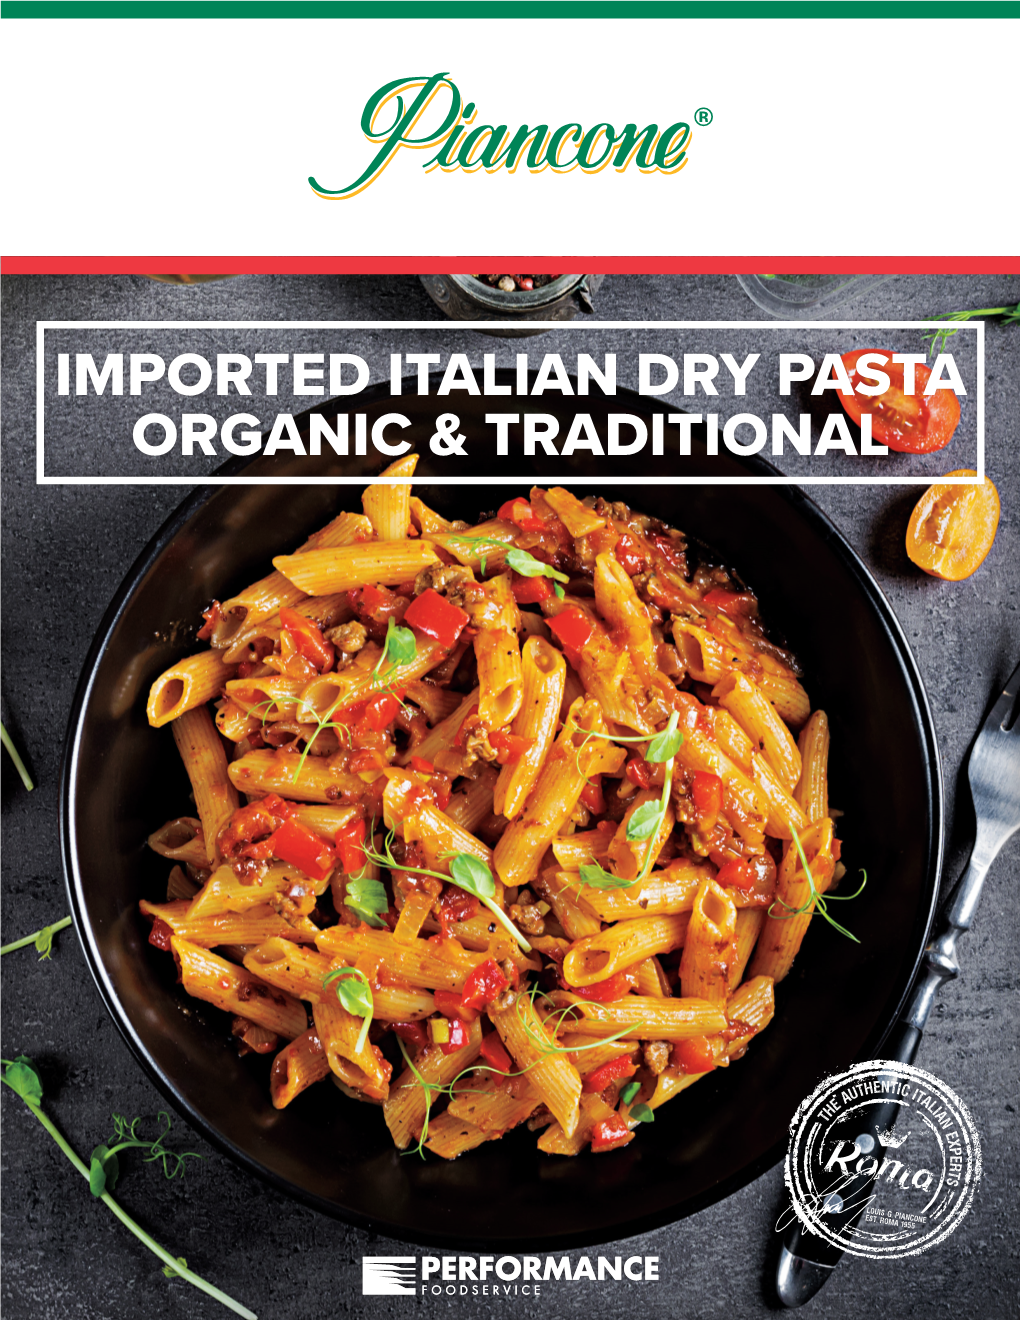 Imported Italian Dry Pasta Organic & Traditional